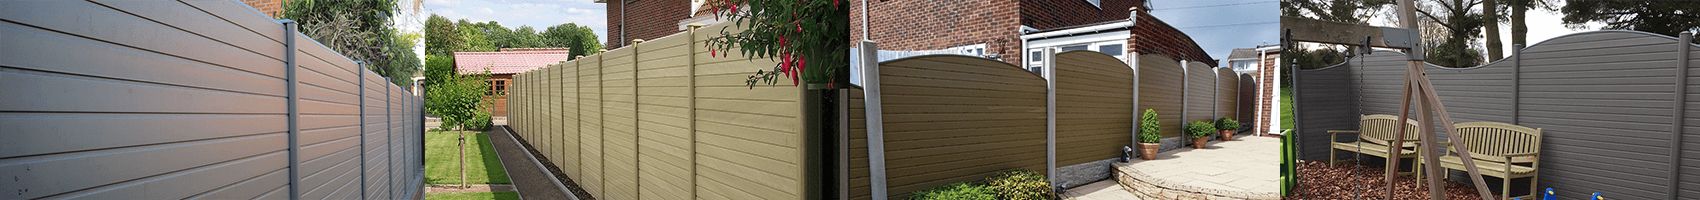 110mm x 90mm PVC Composite Fence Post Walnut 1.8m